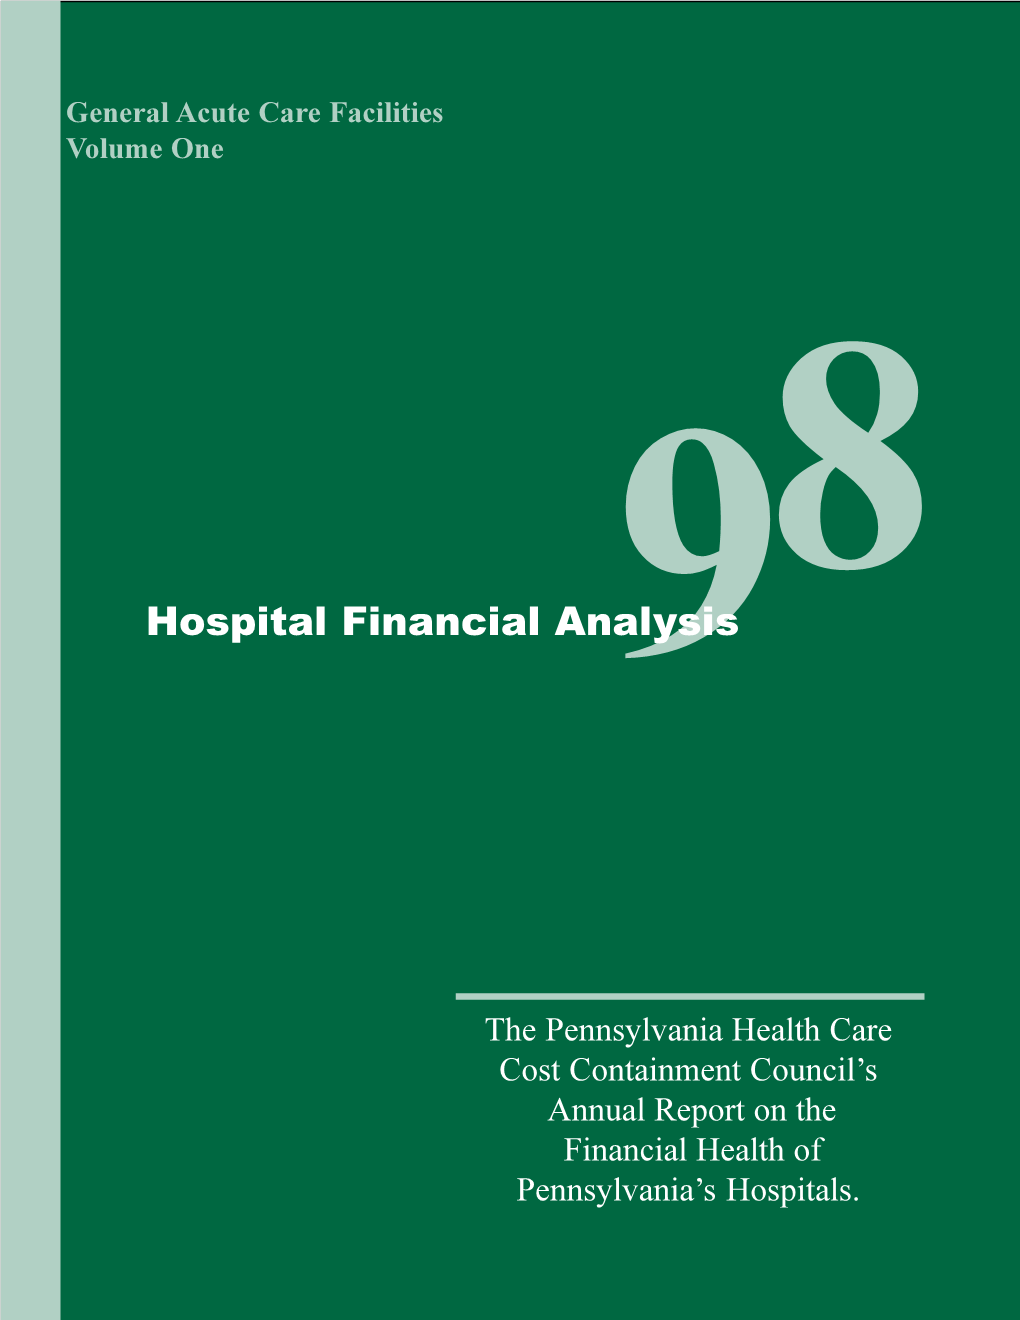 98Financial Report